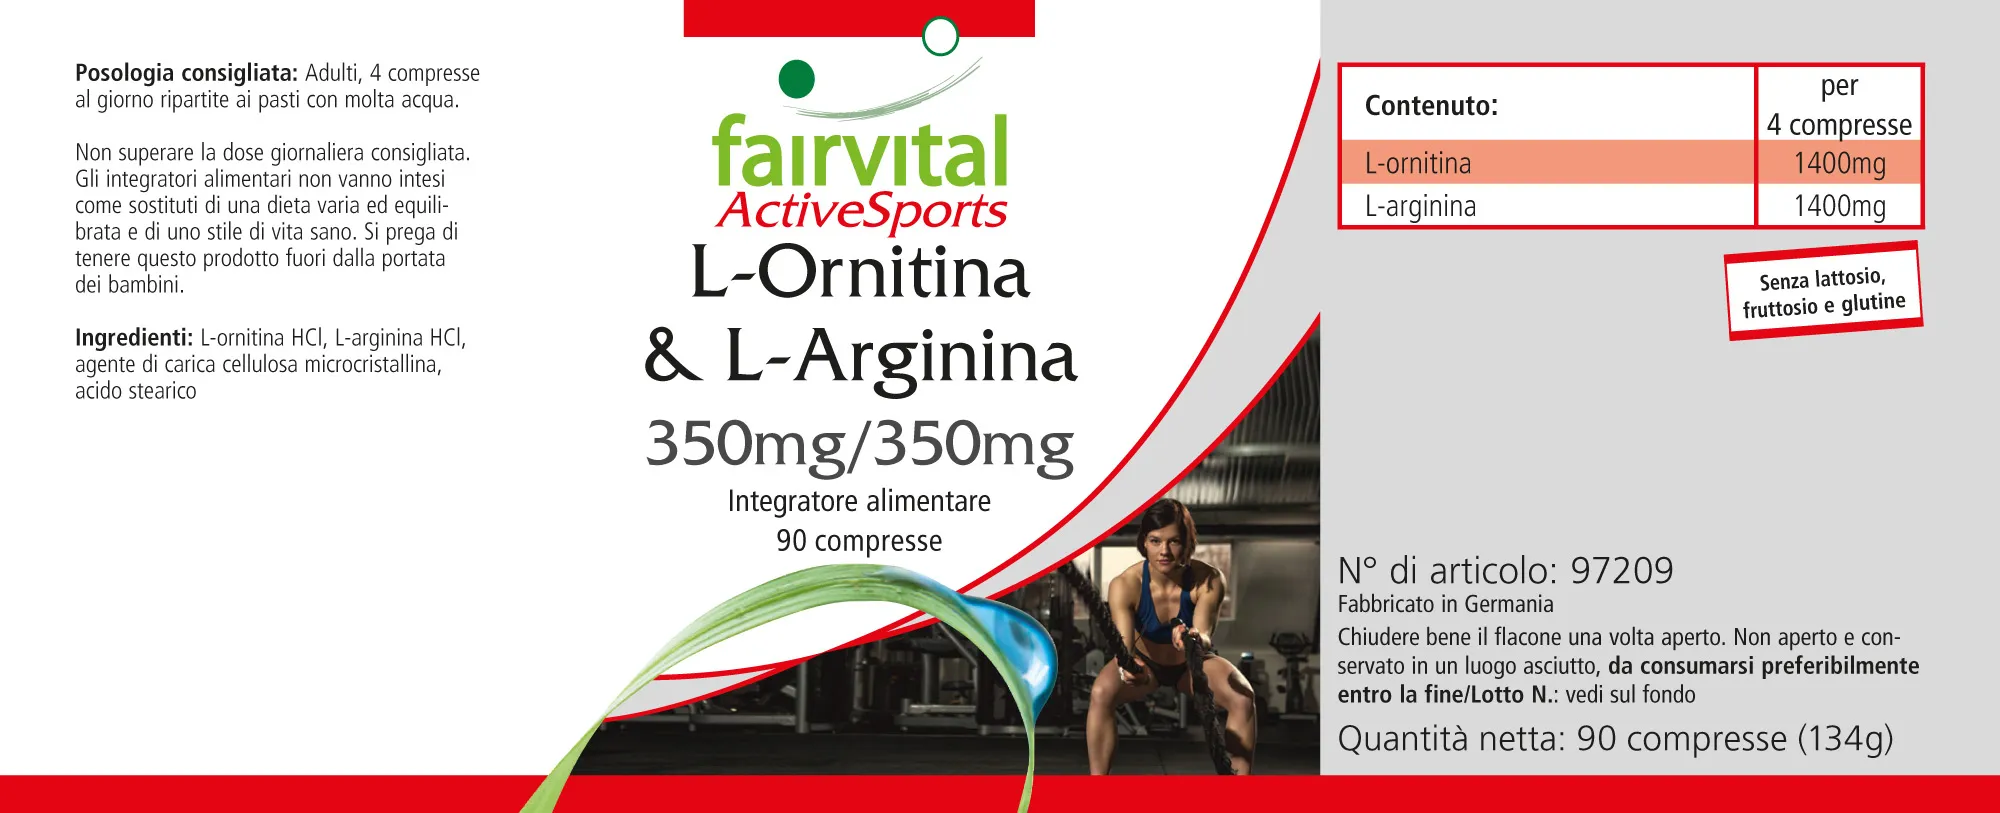 L-Ornithin & L-Arginin 350mg/350mg